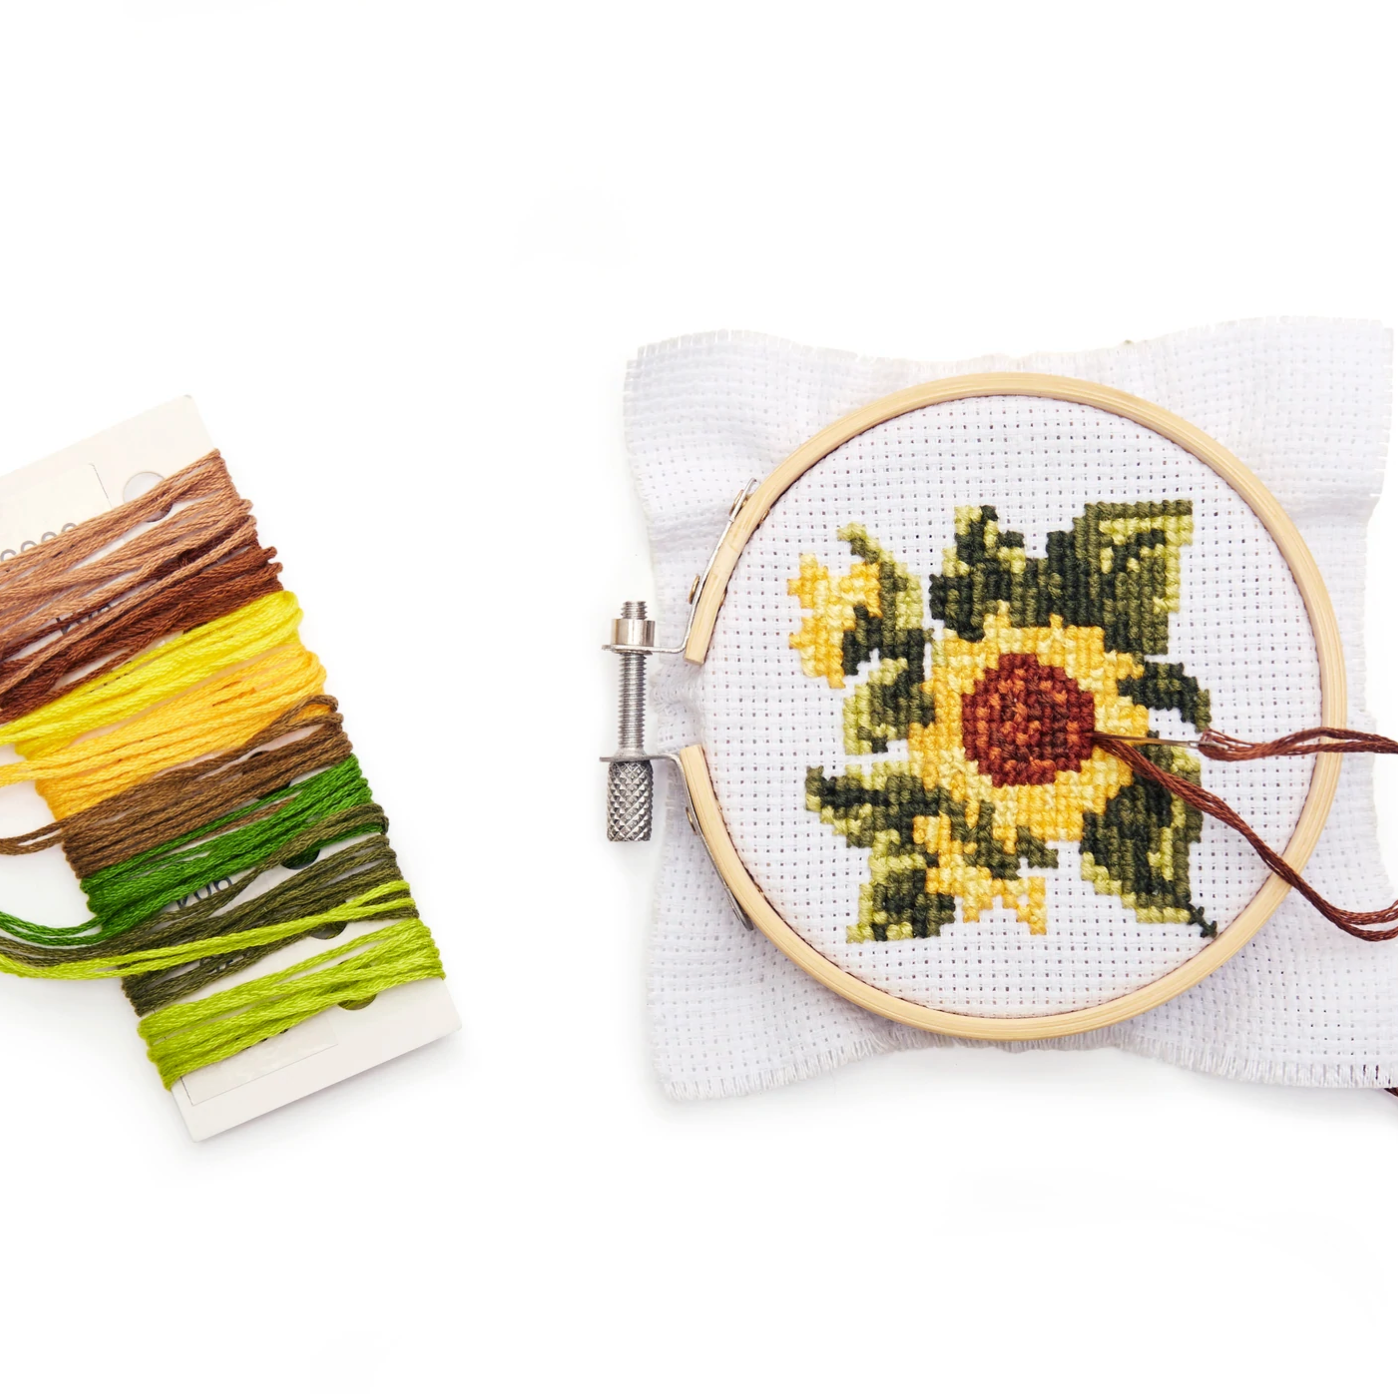 Mini Cross Stitch Embroidery Kit - Sunflower